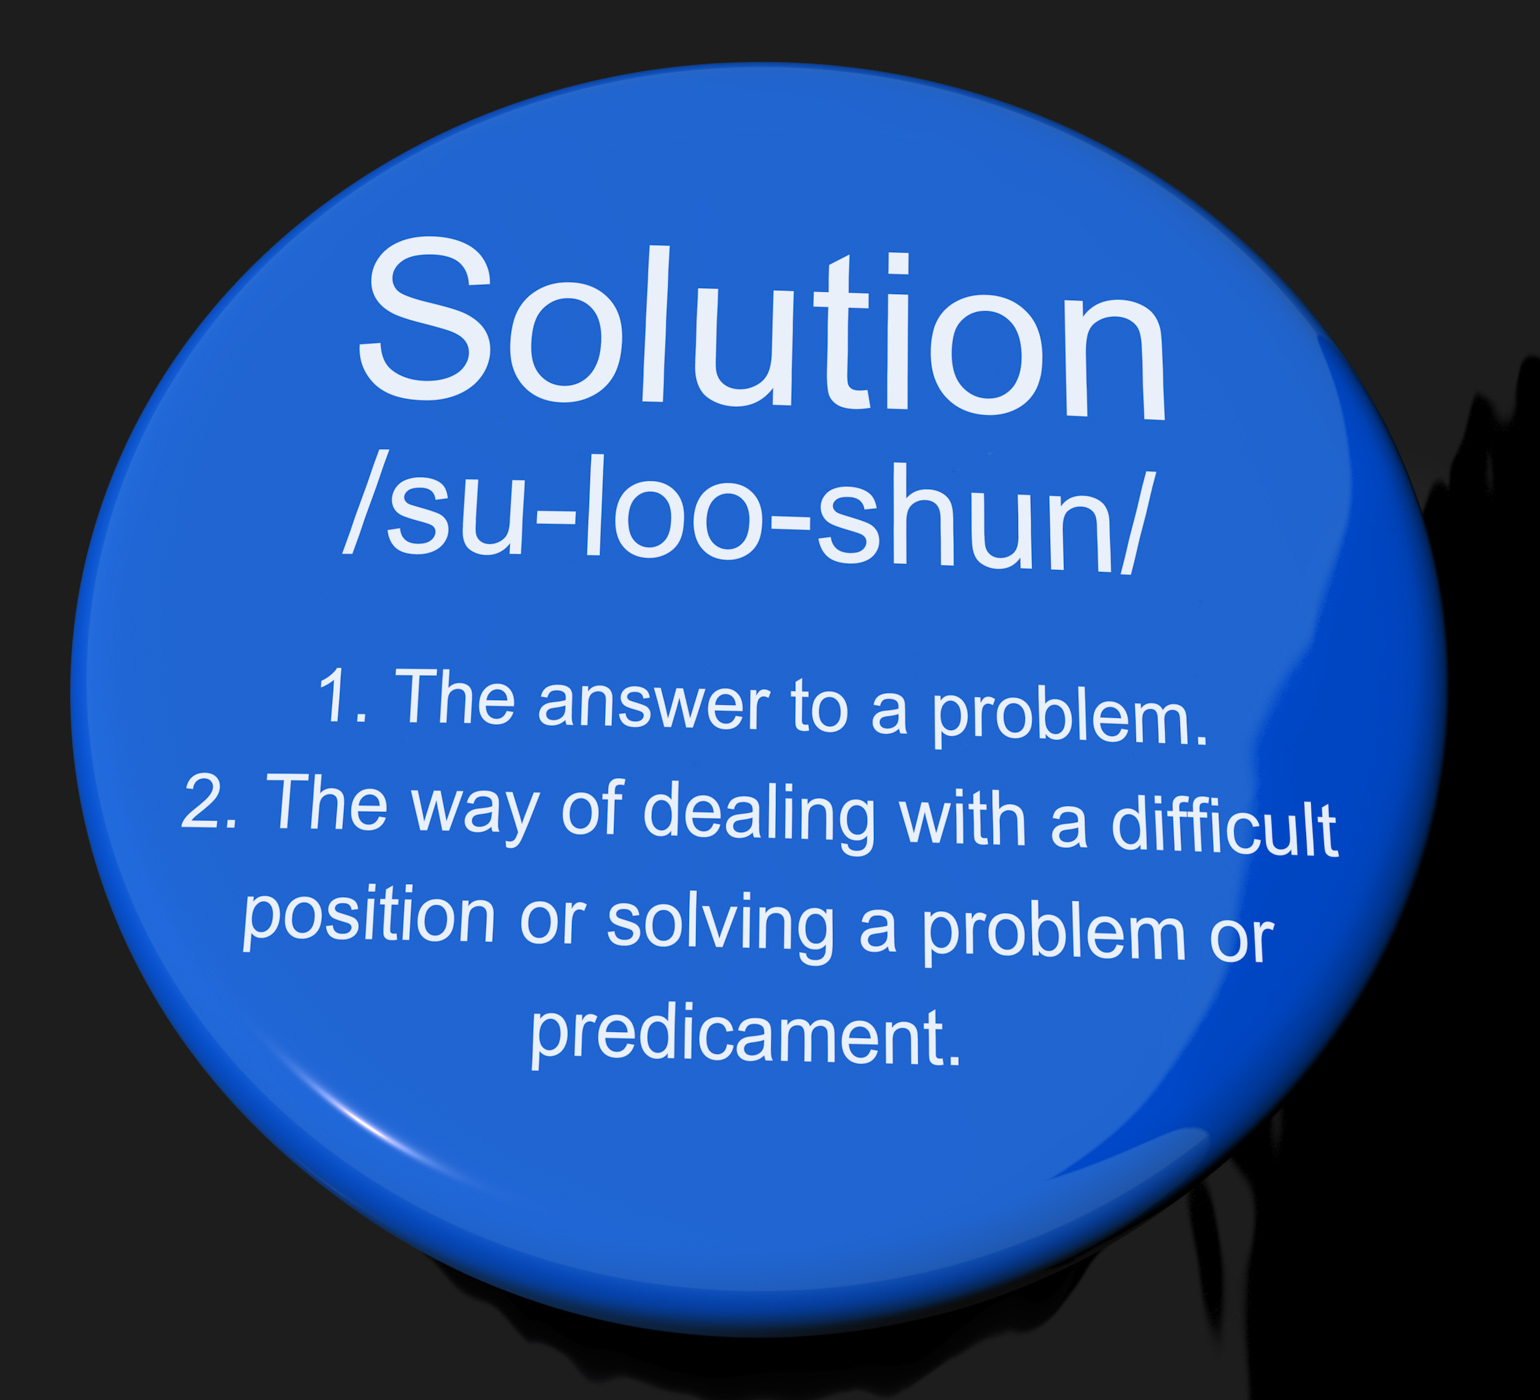 Solution definition button showing achievement vision and success photo